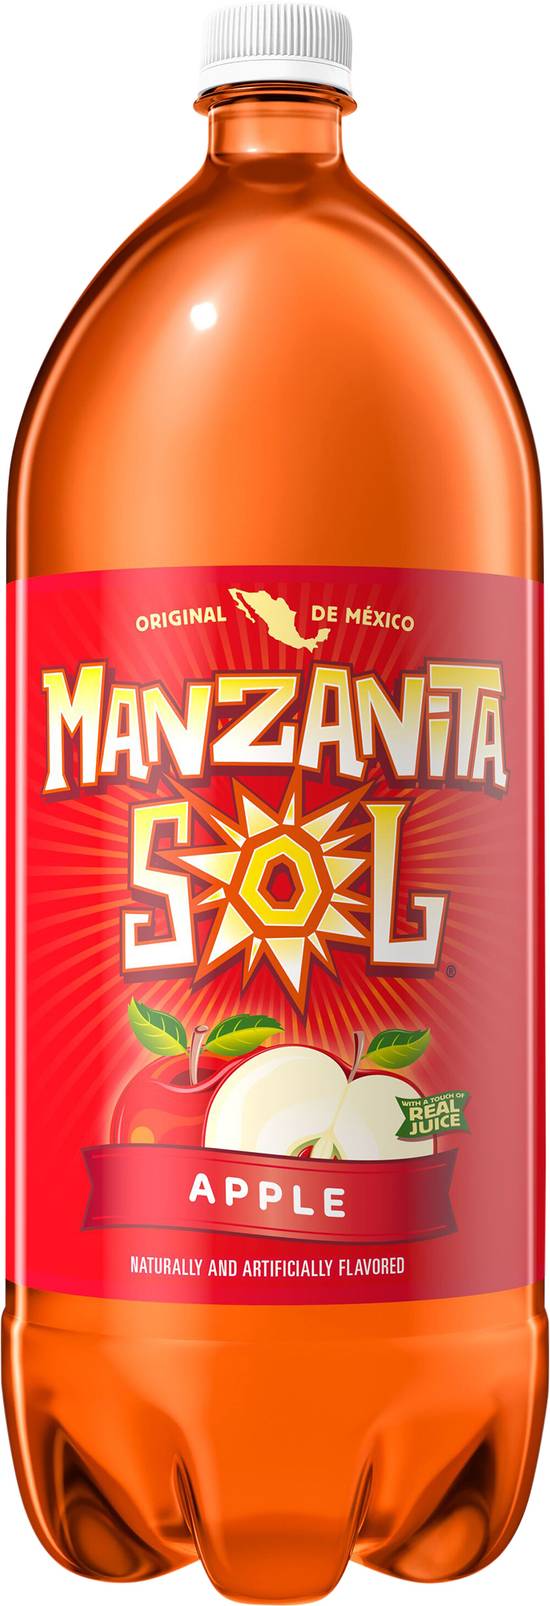 Manzanita Sol Soda (2 L) (apple)